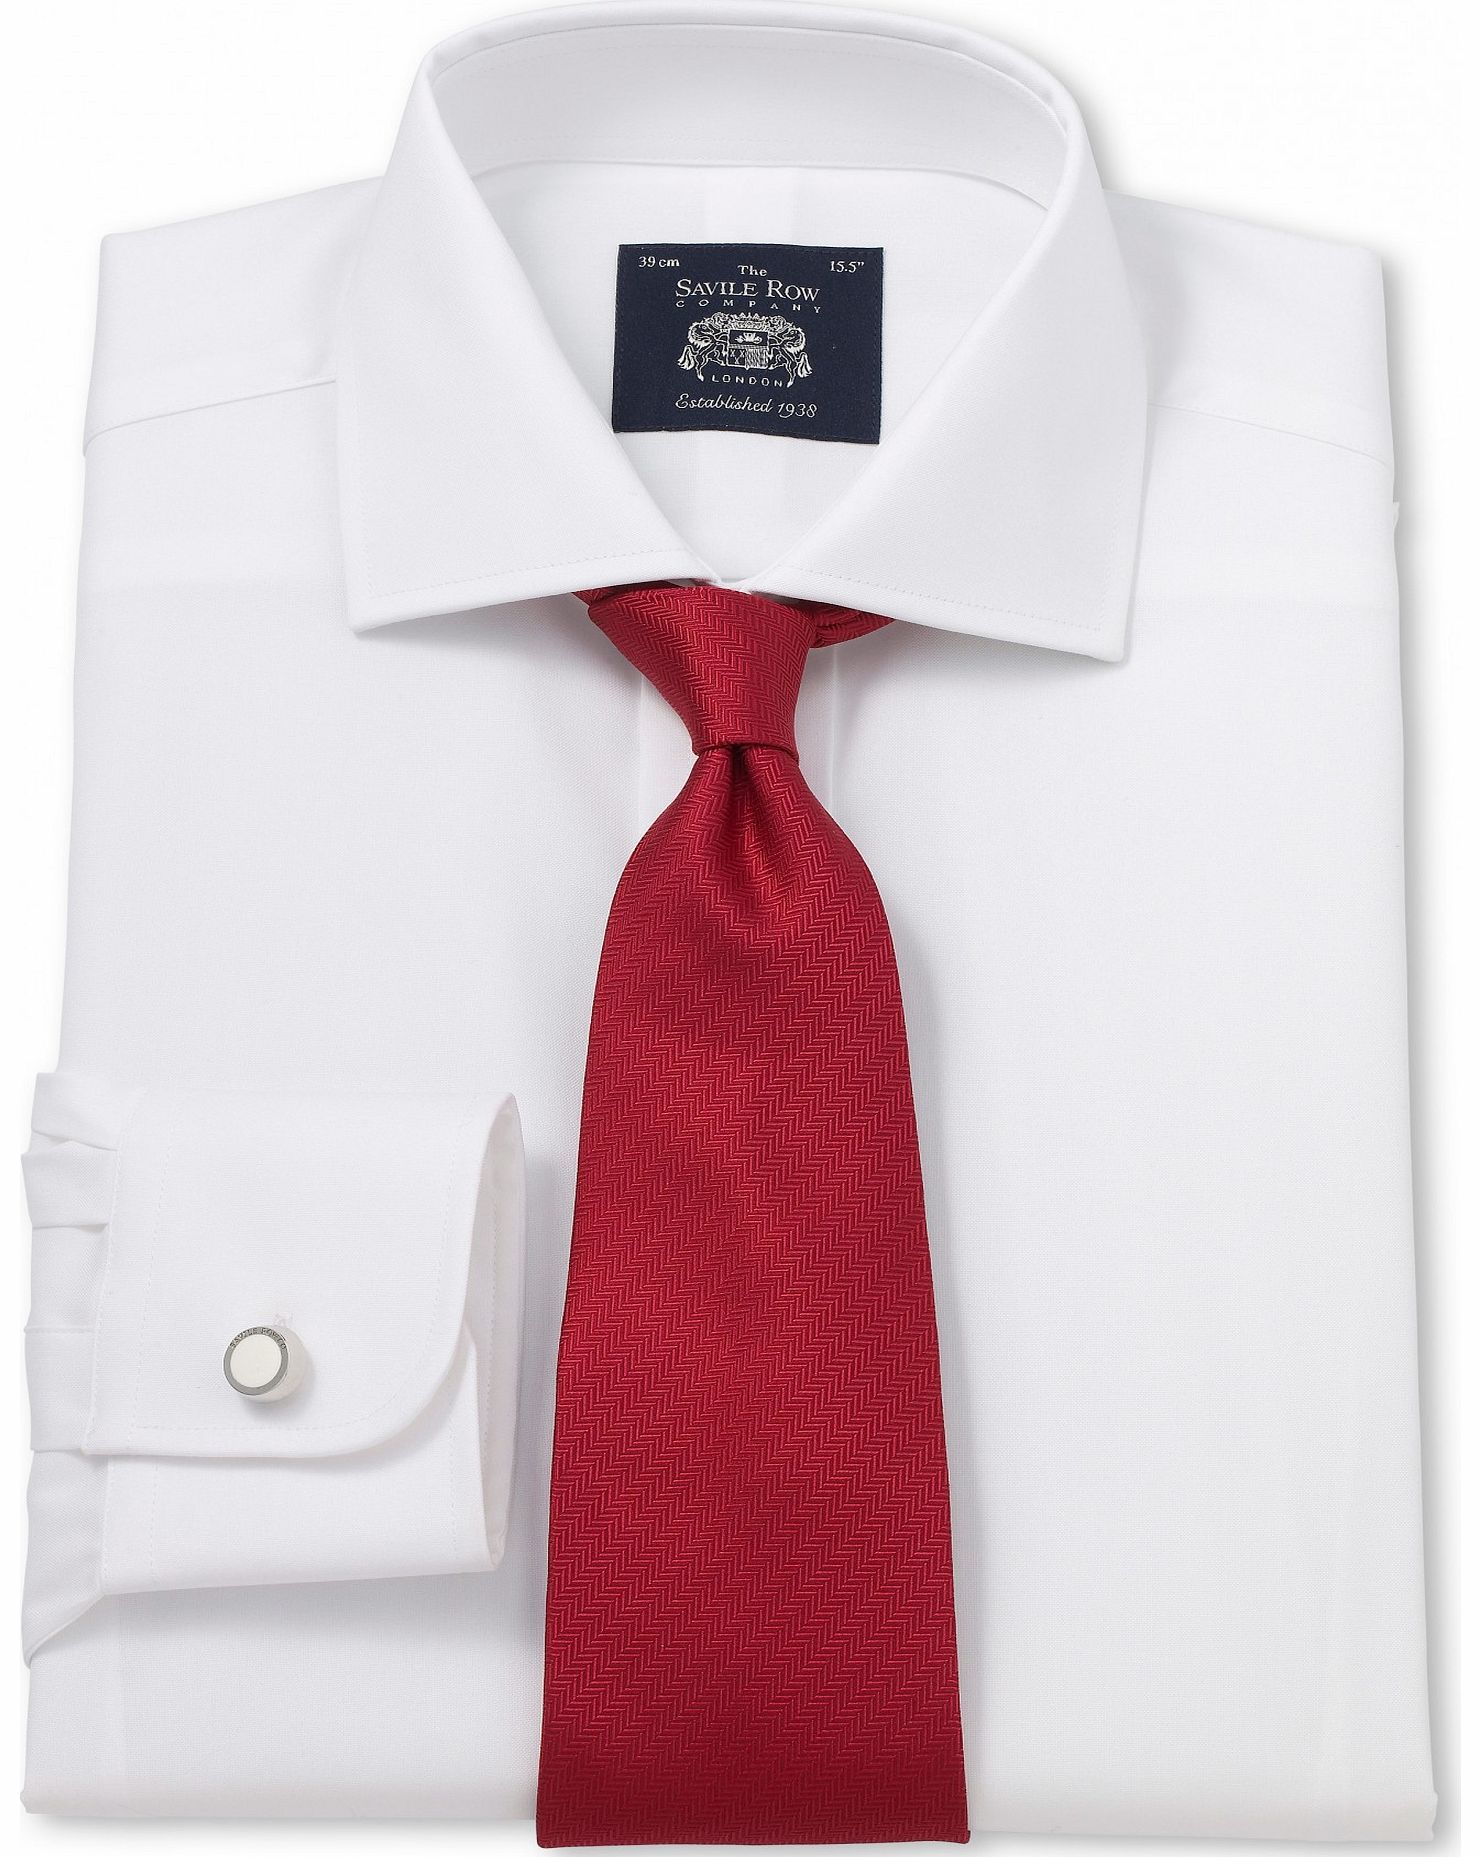 Savile Row Company White Poplin Non Iron Slim Fit Shirt 17`` Single